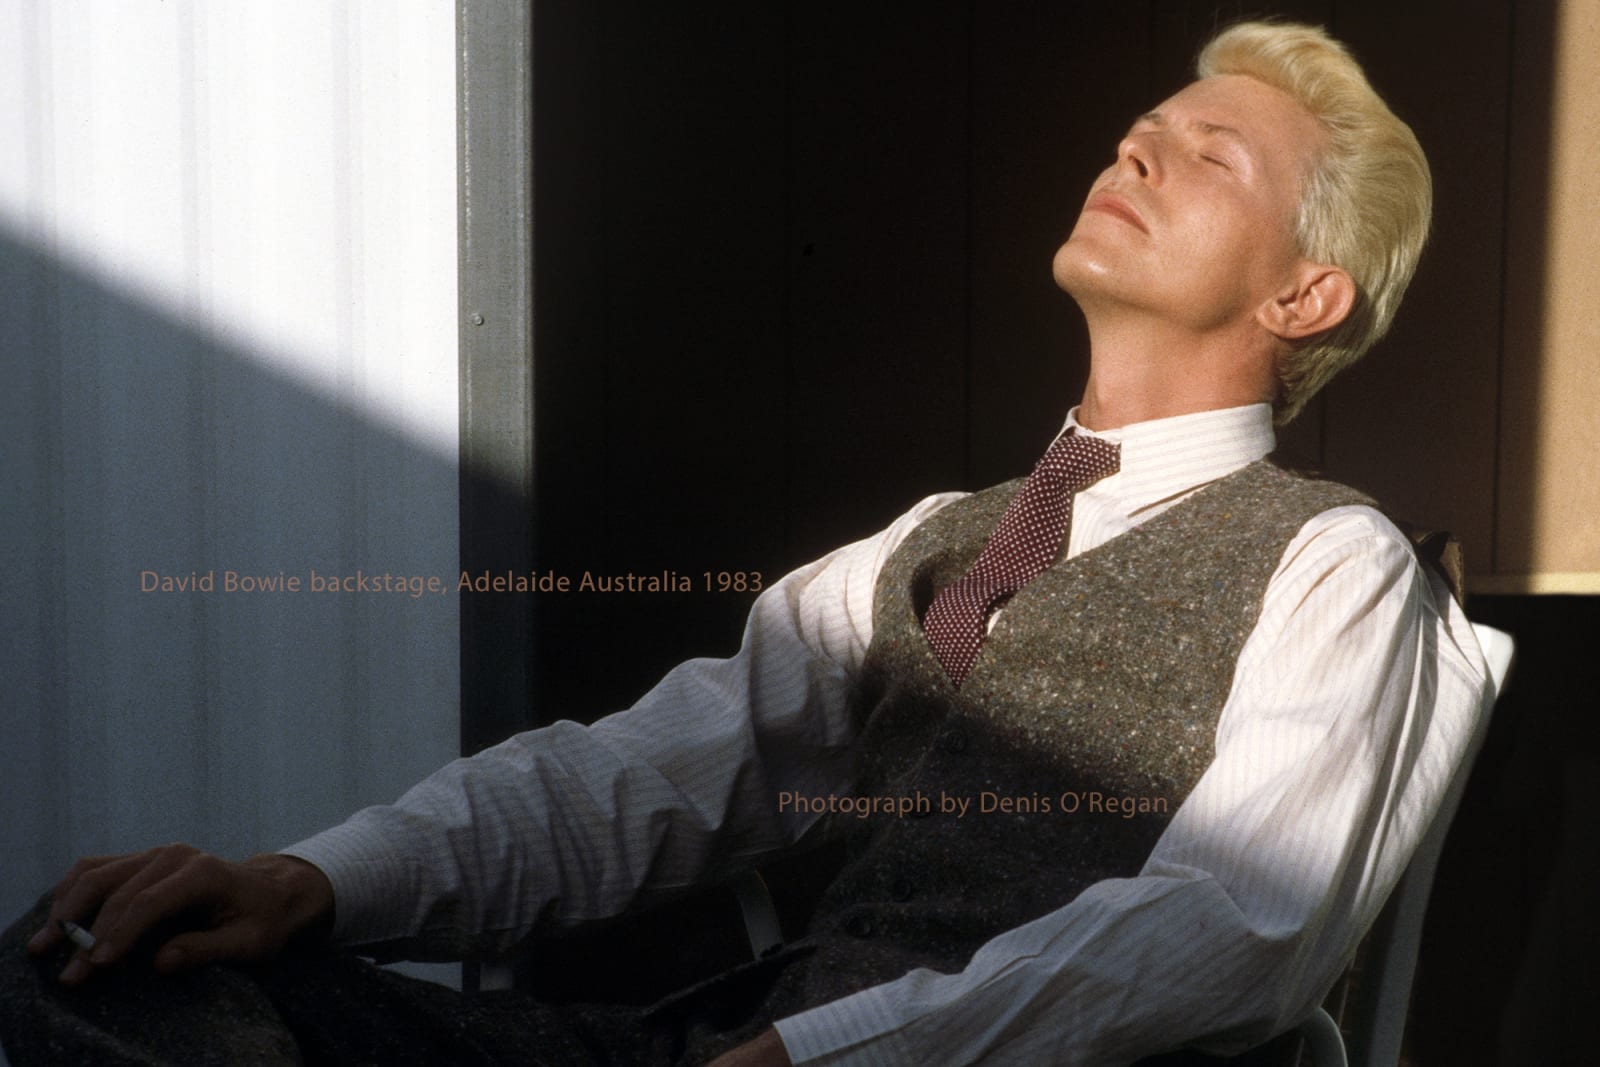 DAVID BOWIE, David Bowie backstage Adelaide, 1983